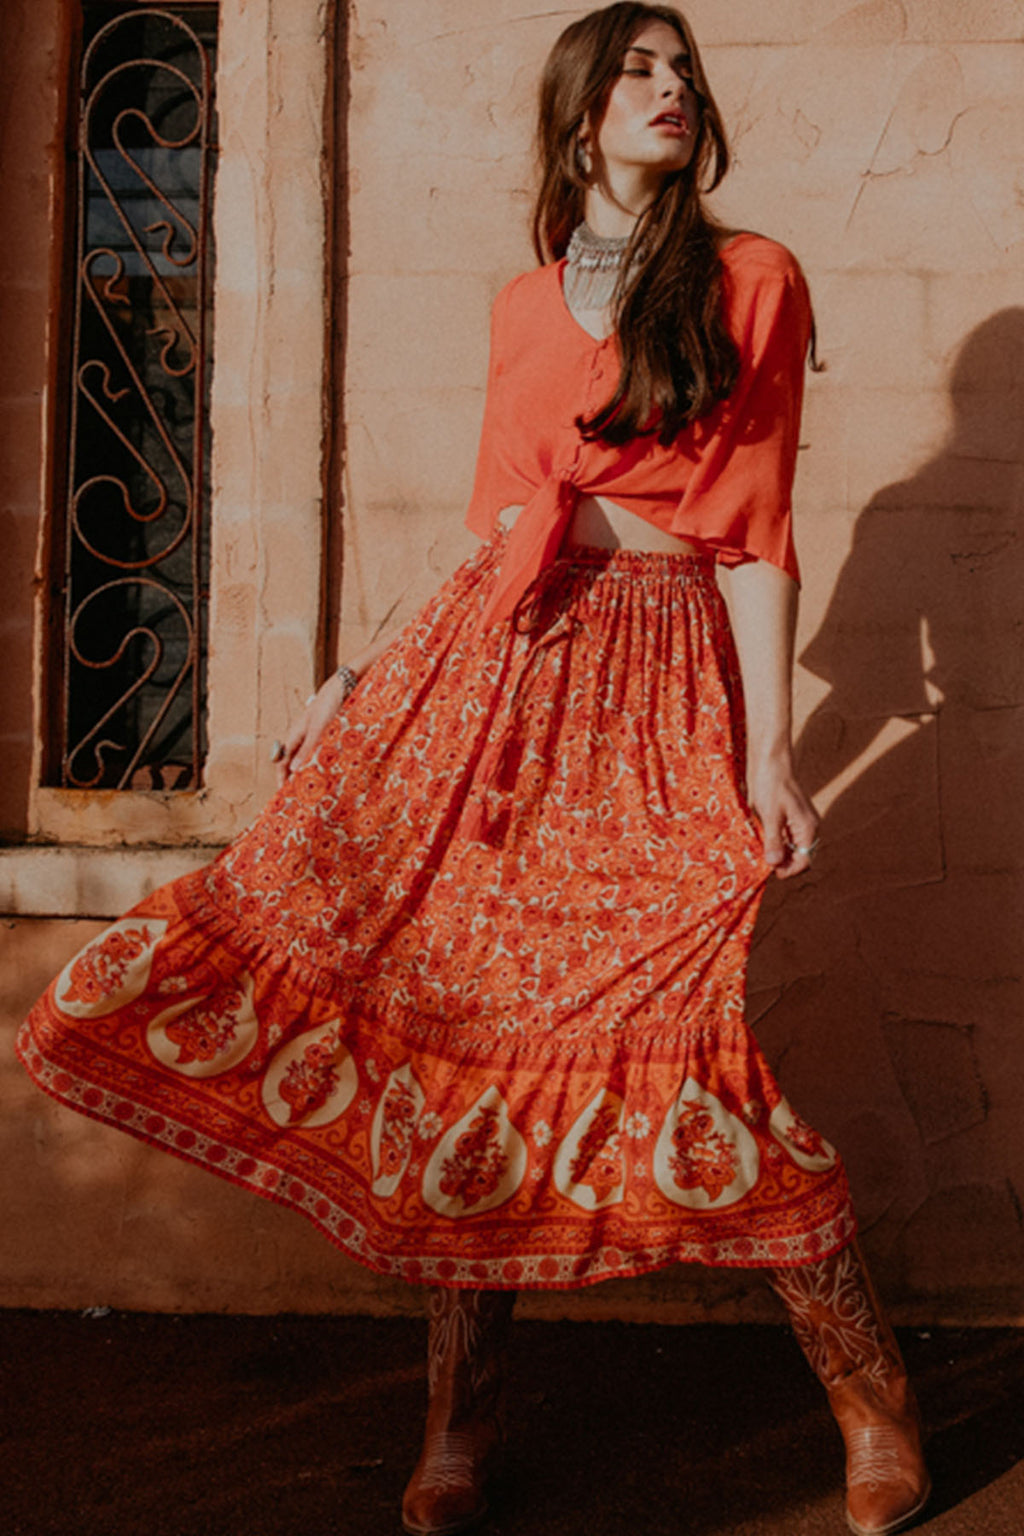 Festival of Roses Skirt - Moroccan Spice - The Bohemian Corner